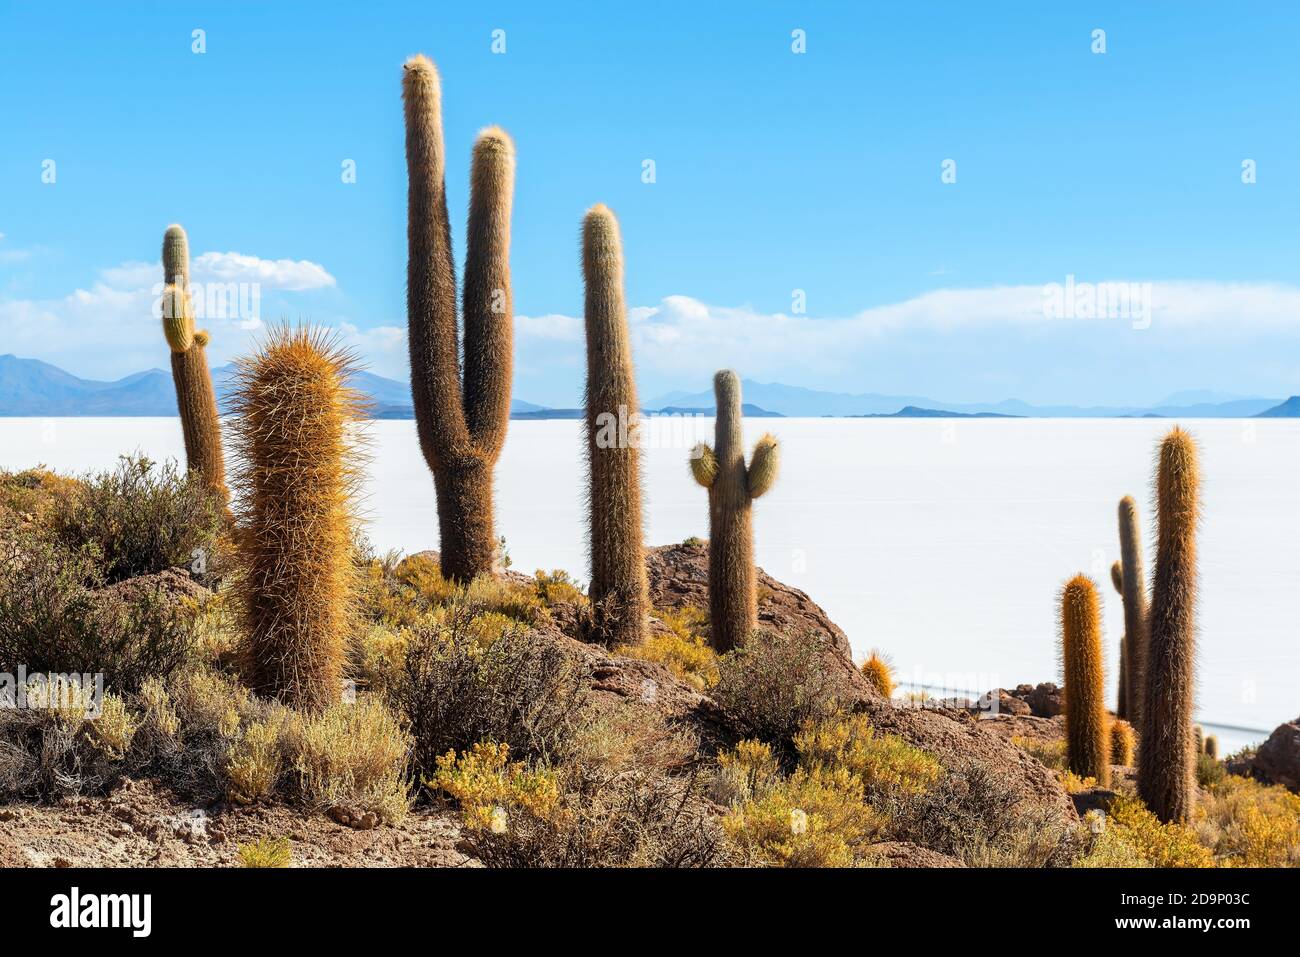 Riesige Atacama Kaktus auf der Insel Incahuasi, mit Blick auf den Salar de Uyuni (Salzsee Uyuni) im Altiplano von Bolivien, Südamerika. Stockfoto